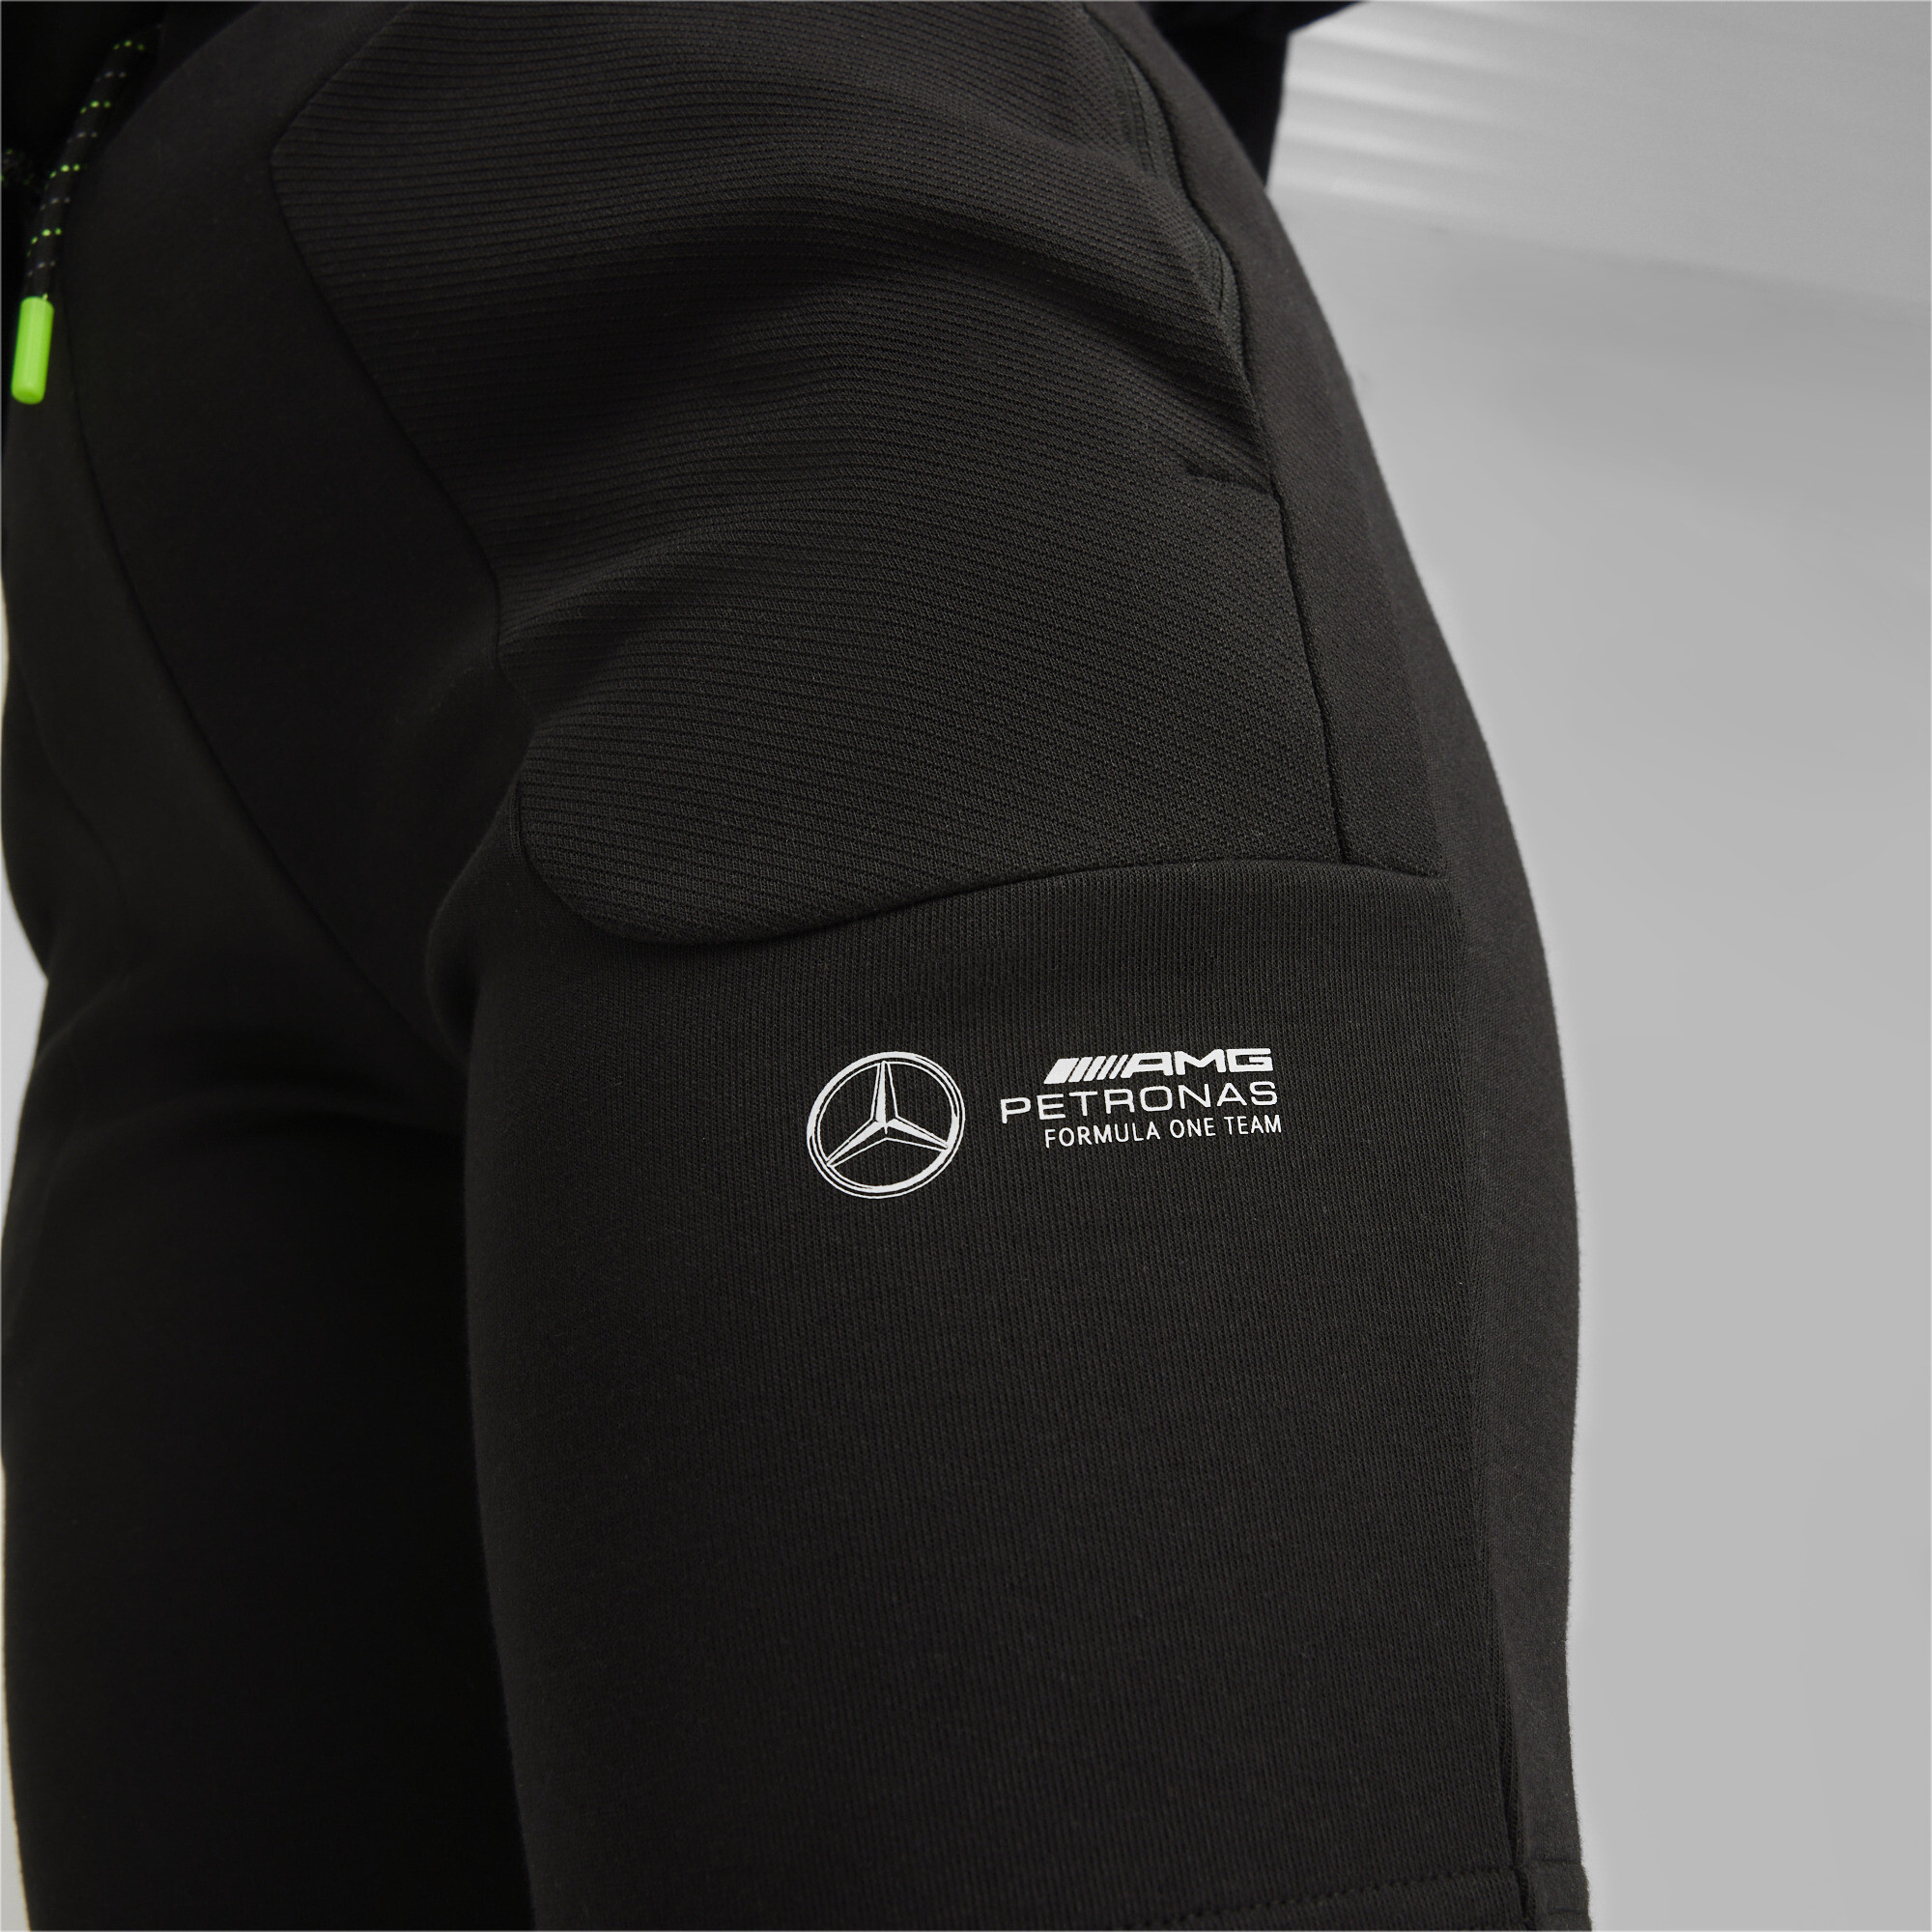 Puma Mercedes-AMG Petronas Motorsport Youth Shorts, Black, Size 7-8Y, Age